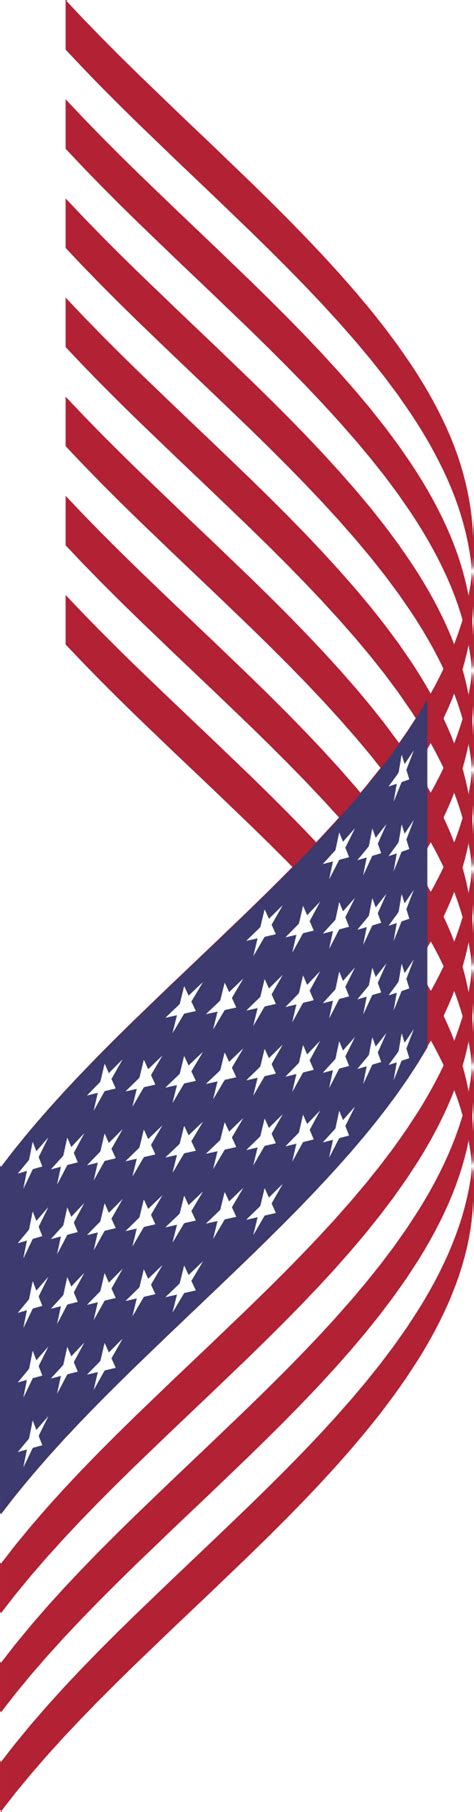 Download Hd Big Image Flag Of The United States Transparent Png Image